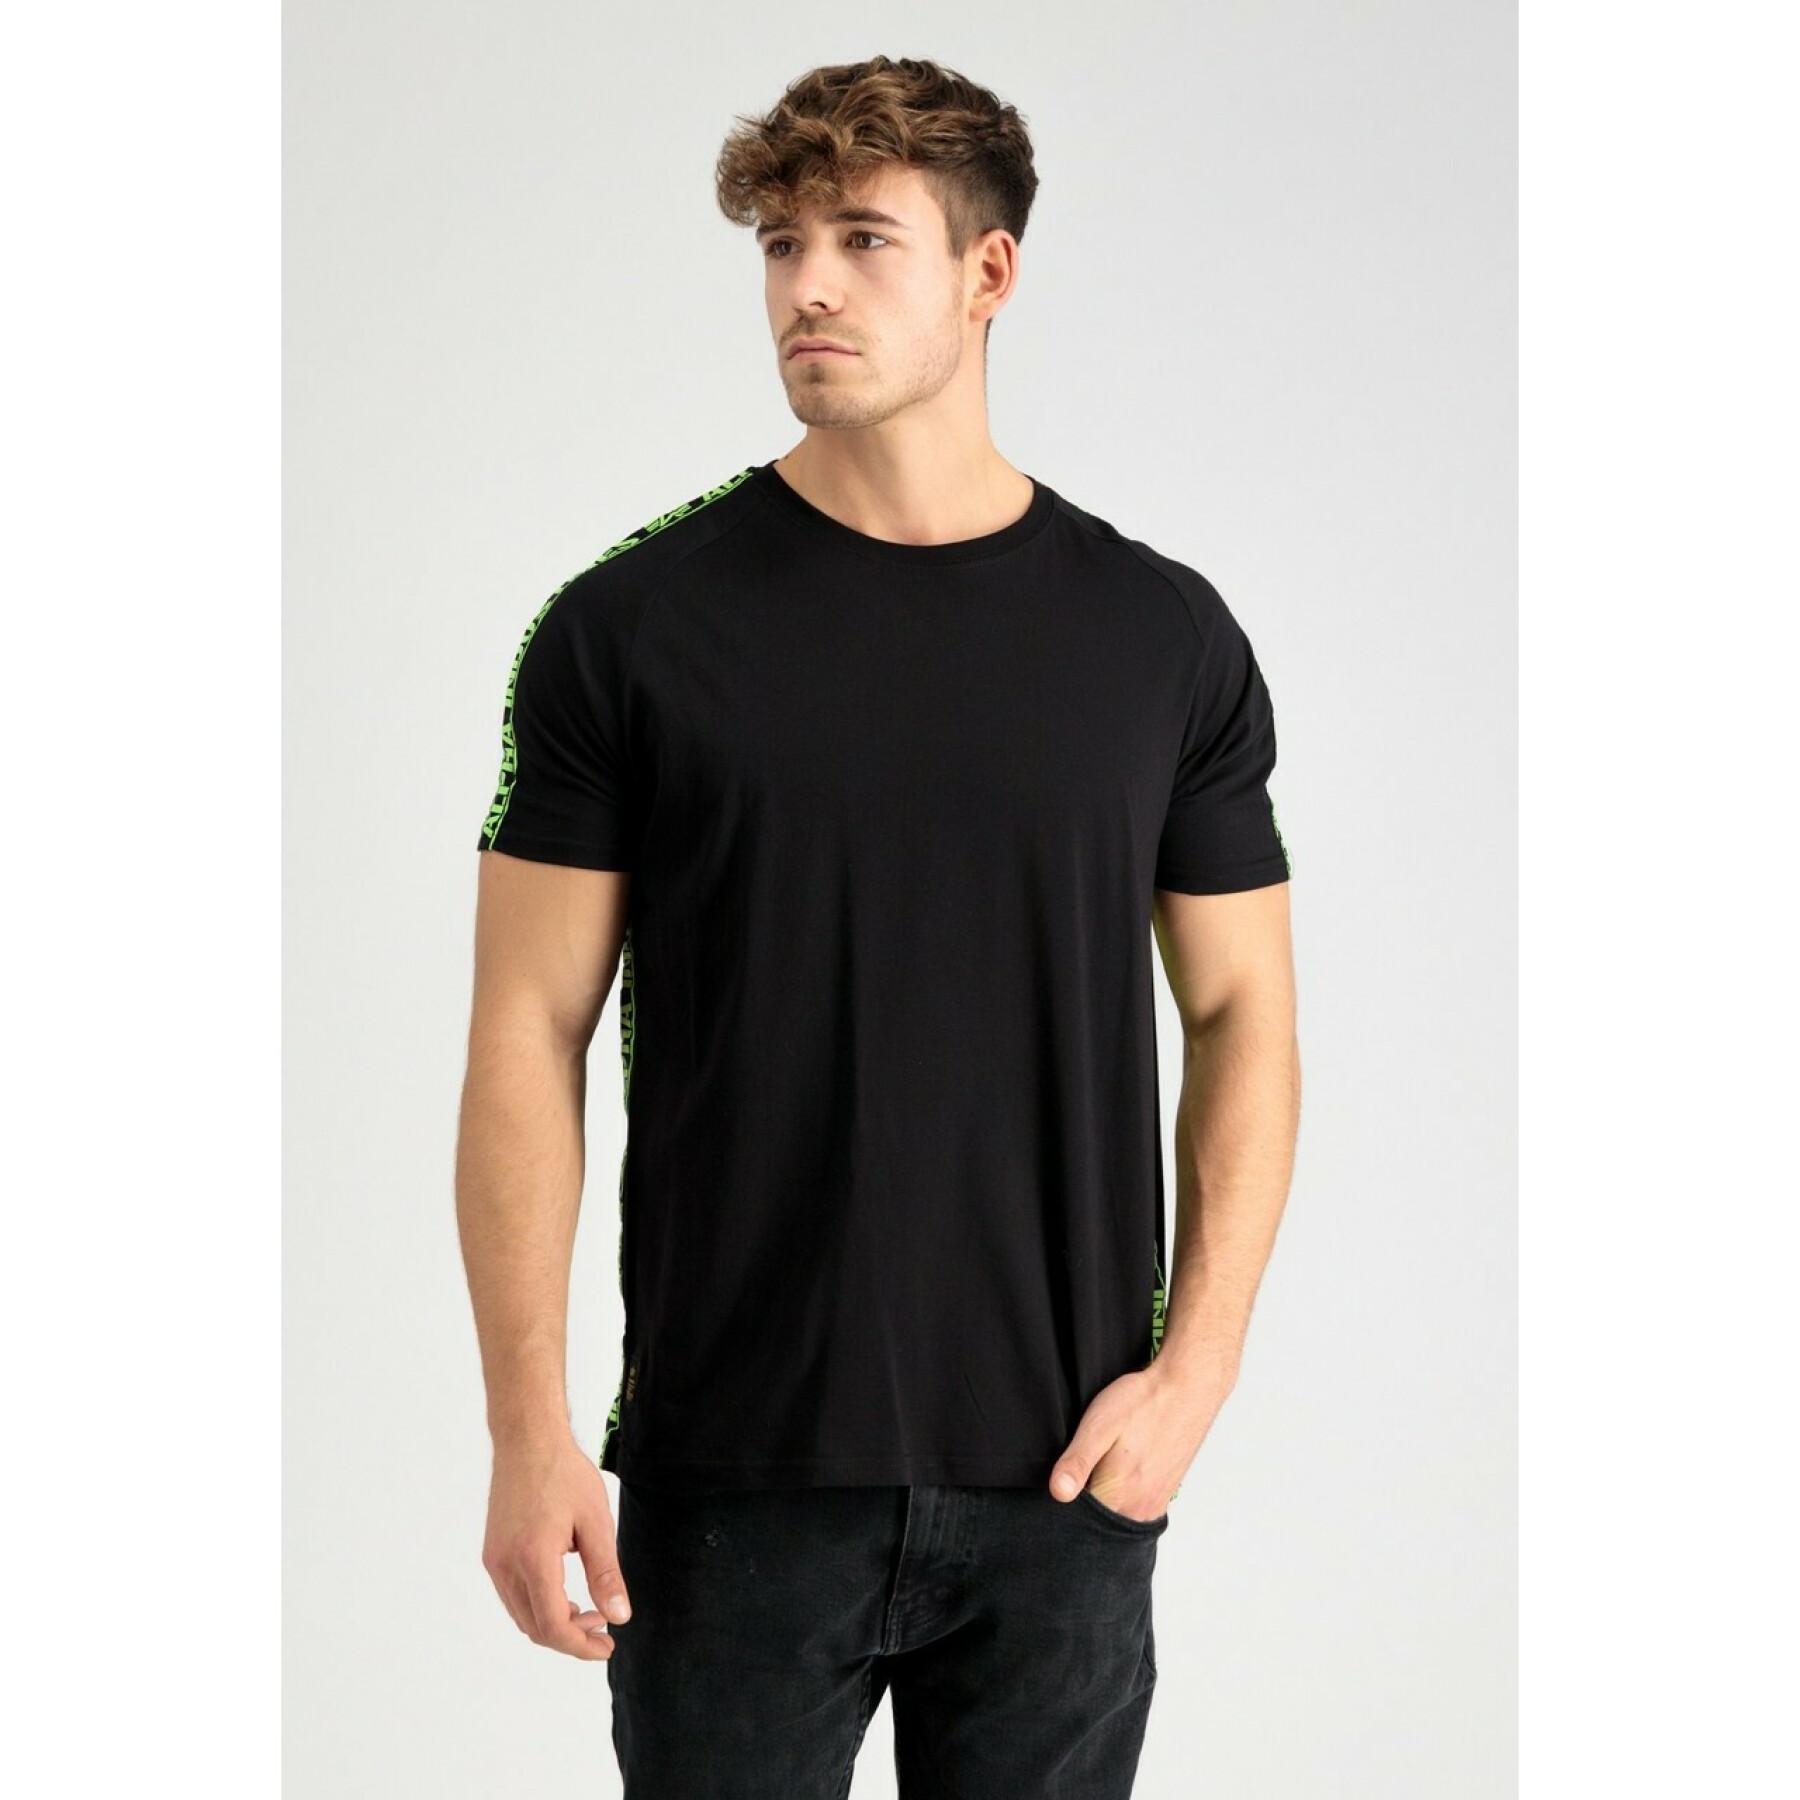 Men - - - T-shirt & AI T-shirts Polo Alpha shirts Industries Clothing Tape